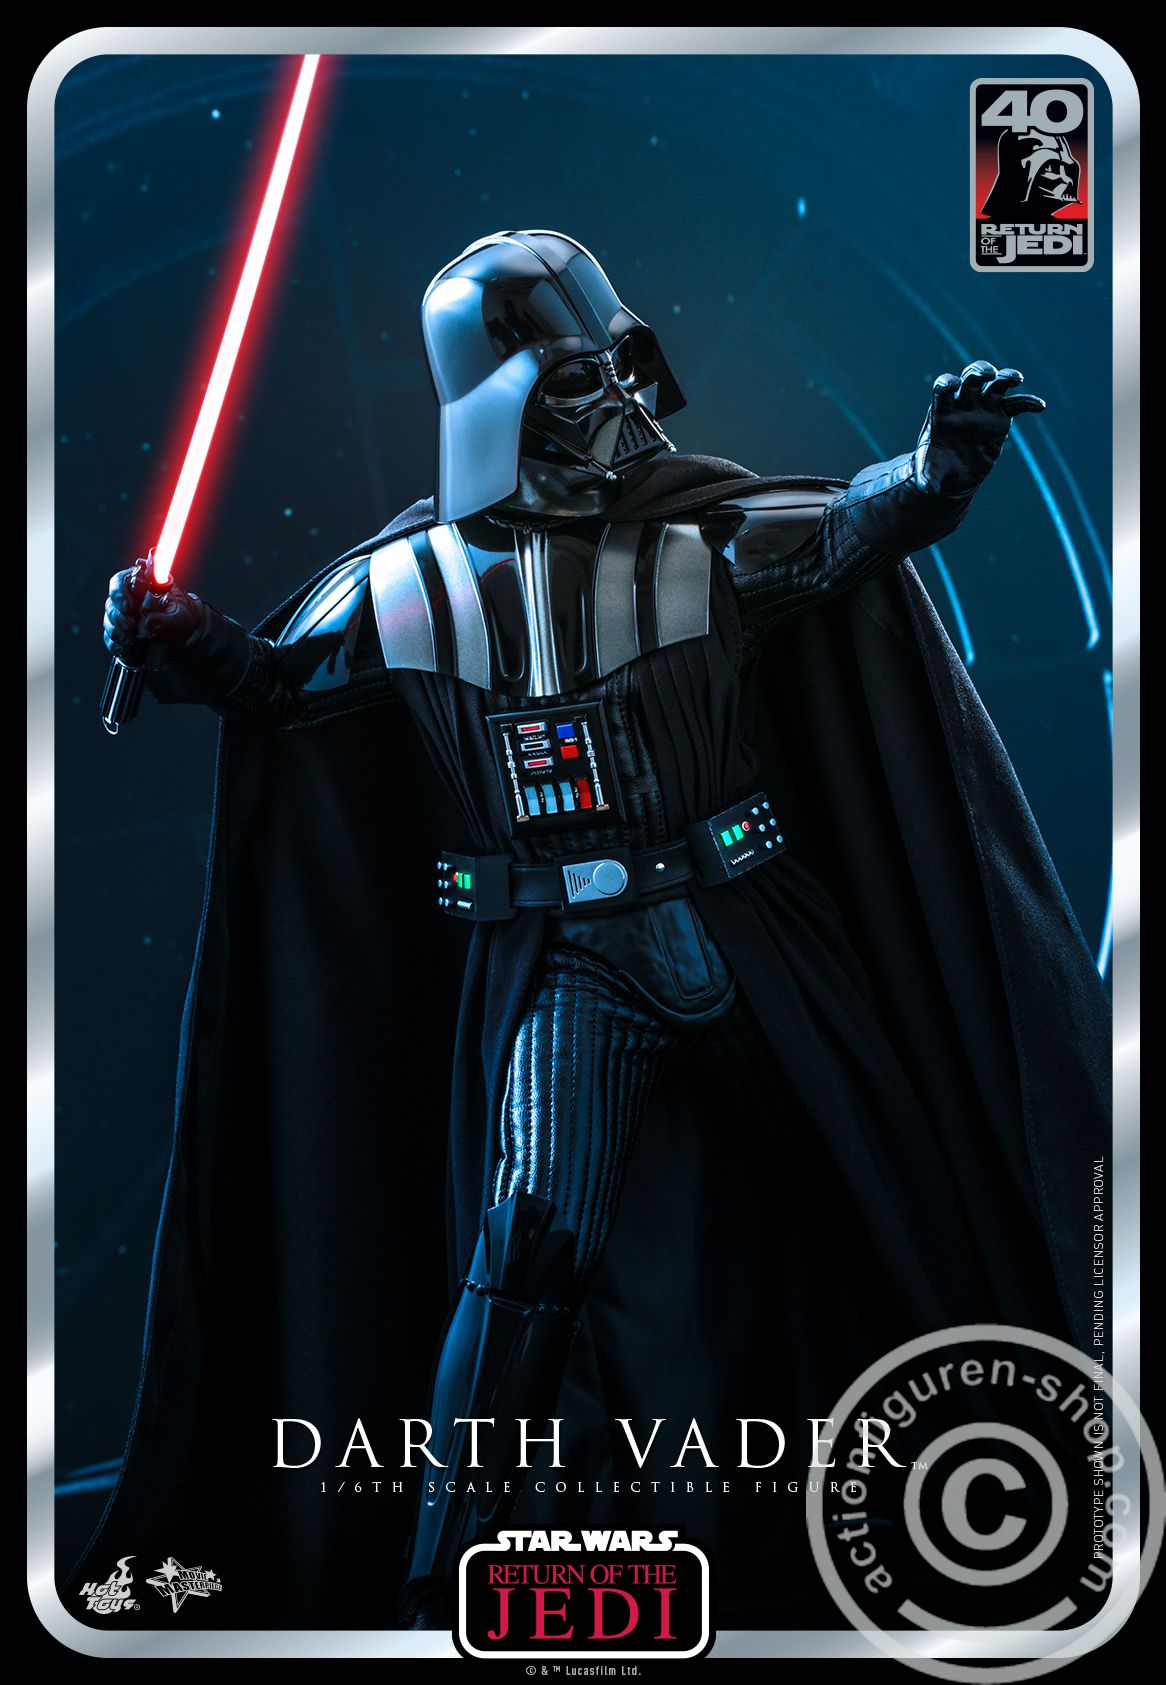 Star Wars Episode VI: Return of the Jedi - Darth Vader